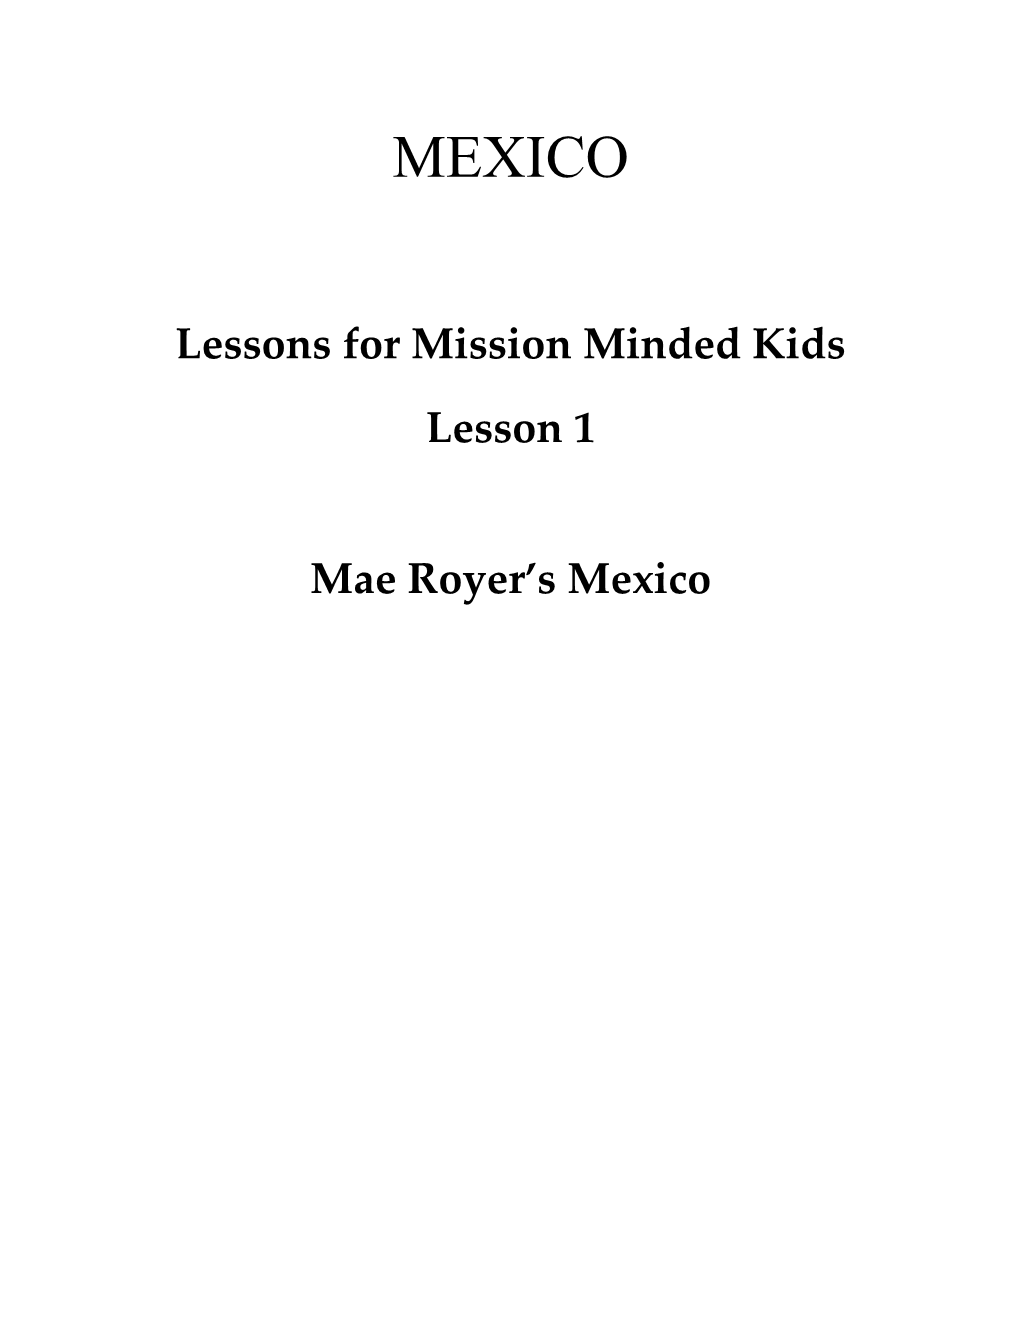 Lessons for Mission Minded Kids